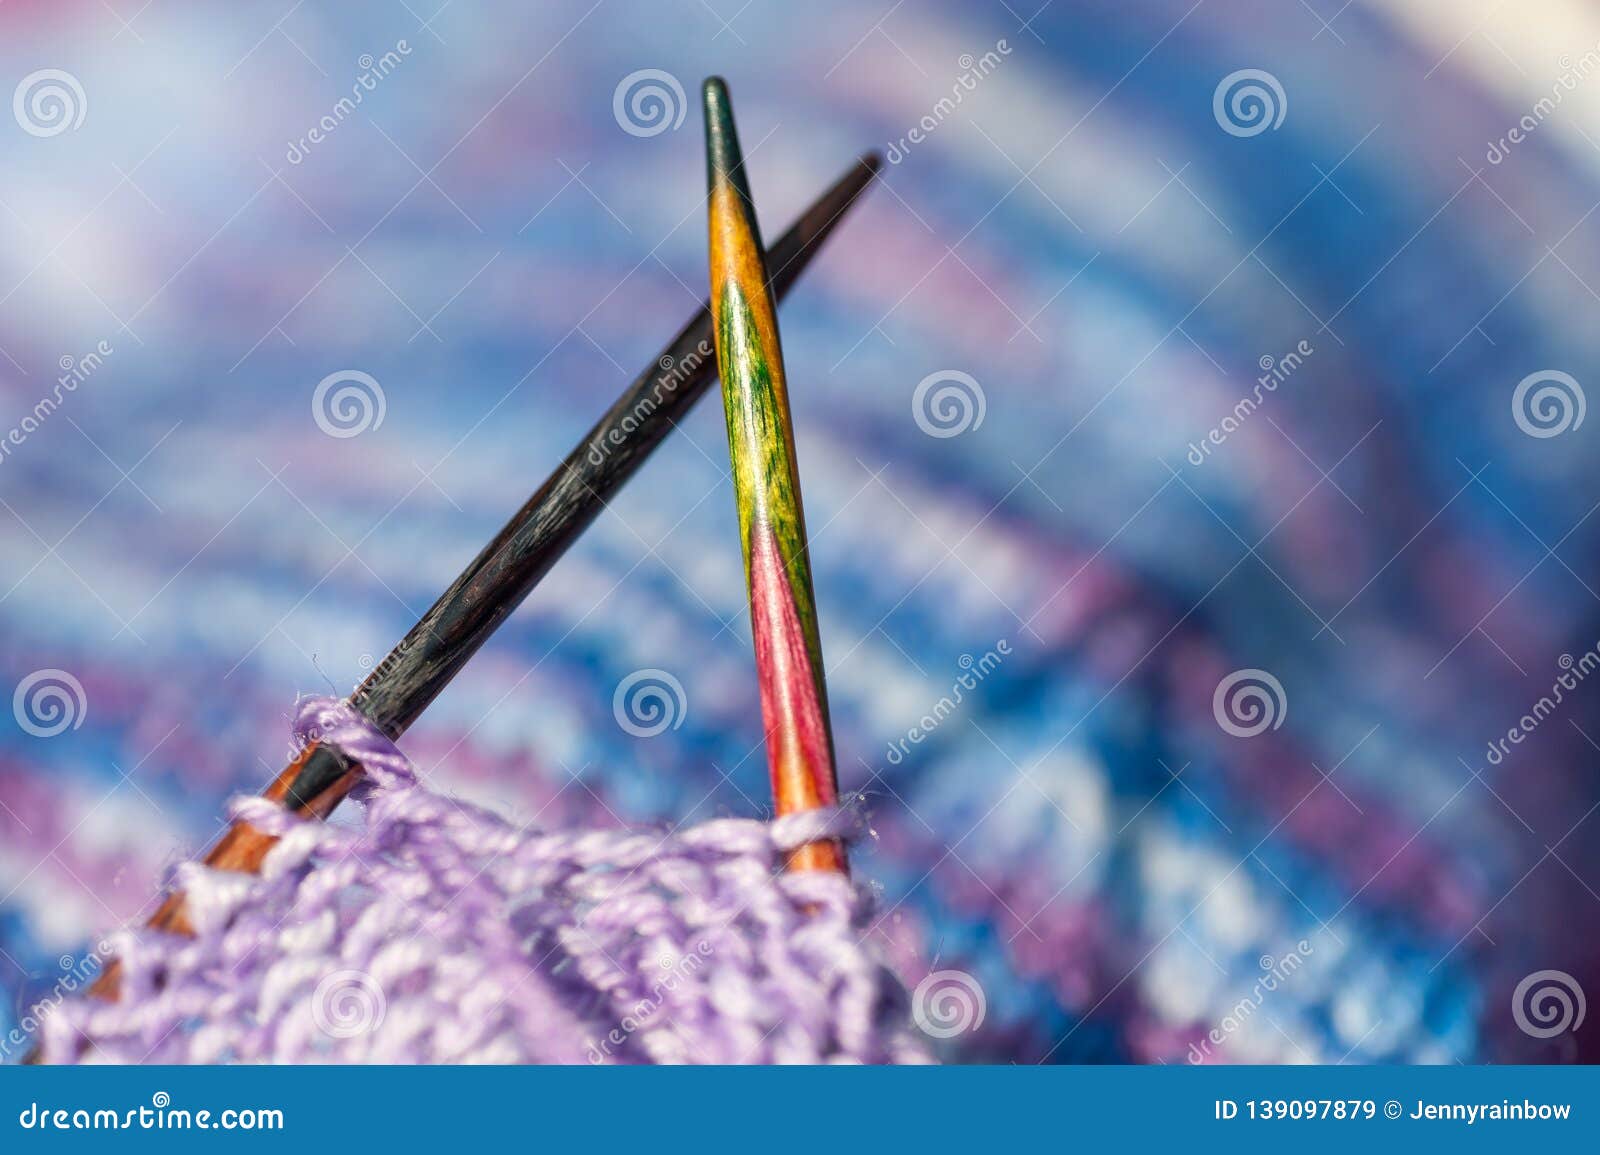 Macro of Knitting Needles with Pale Purple Yarn Stock Image - Image of ...